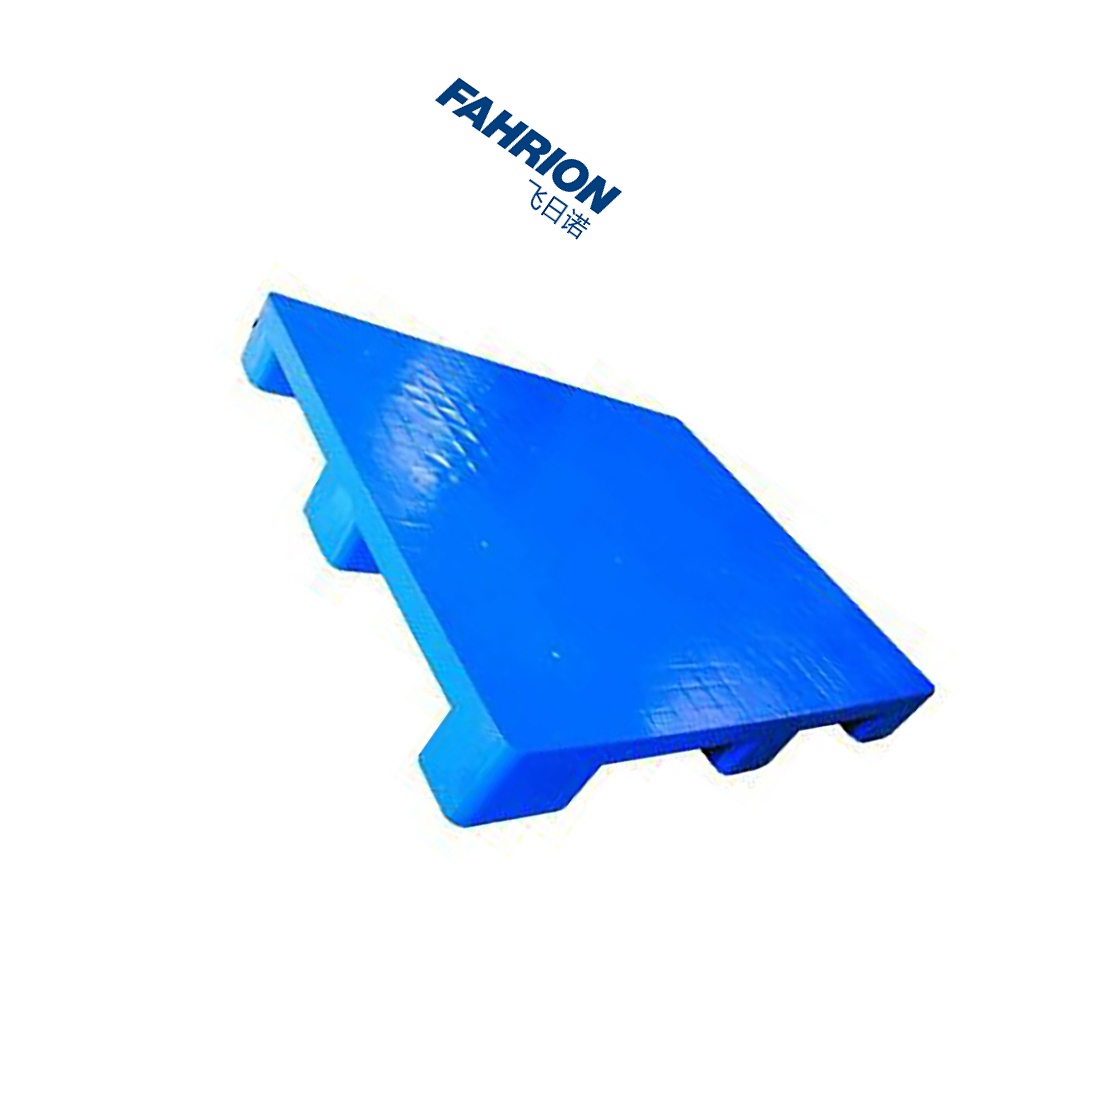 FAHRION 蓝色塑料托盘 GD99-900-2216